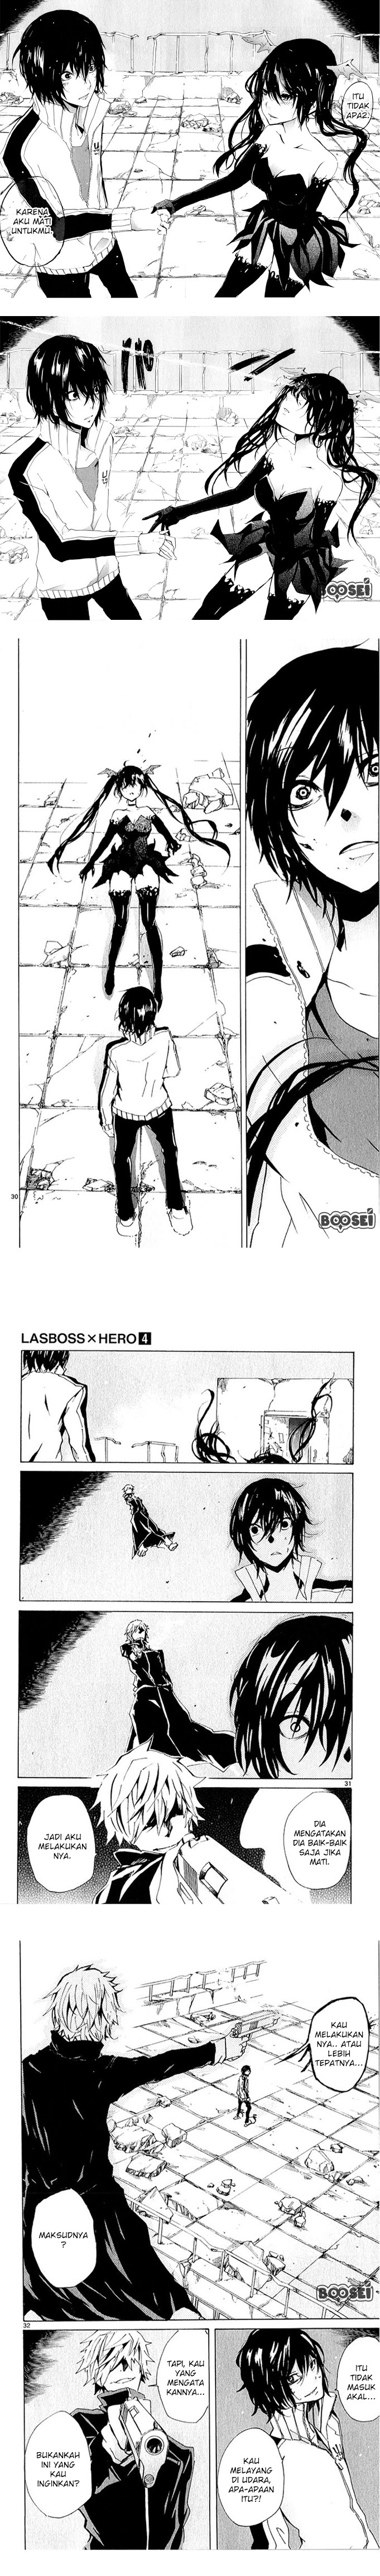 Lasboss x Hero Chapter 16